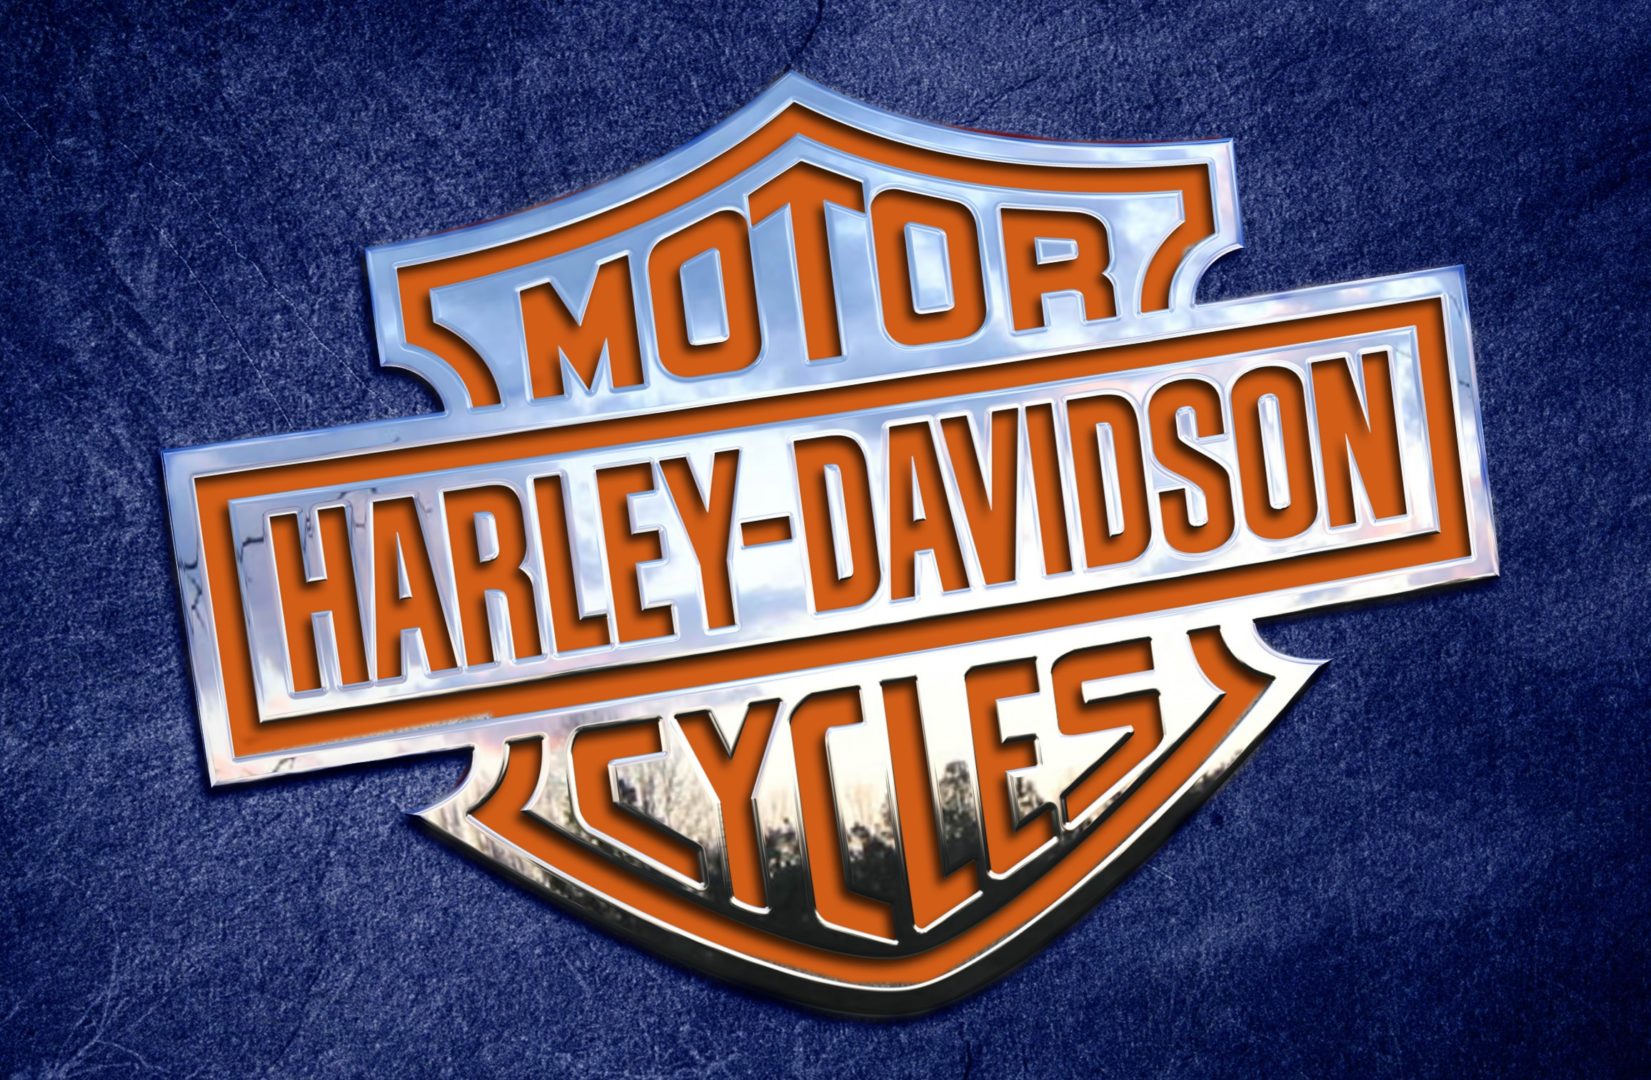 Harley-Davidson Motorcycles Logo